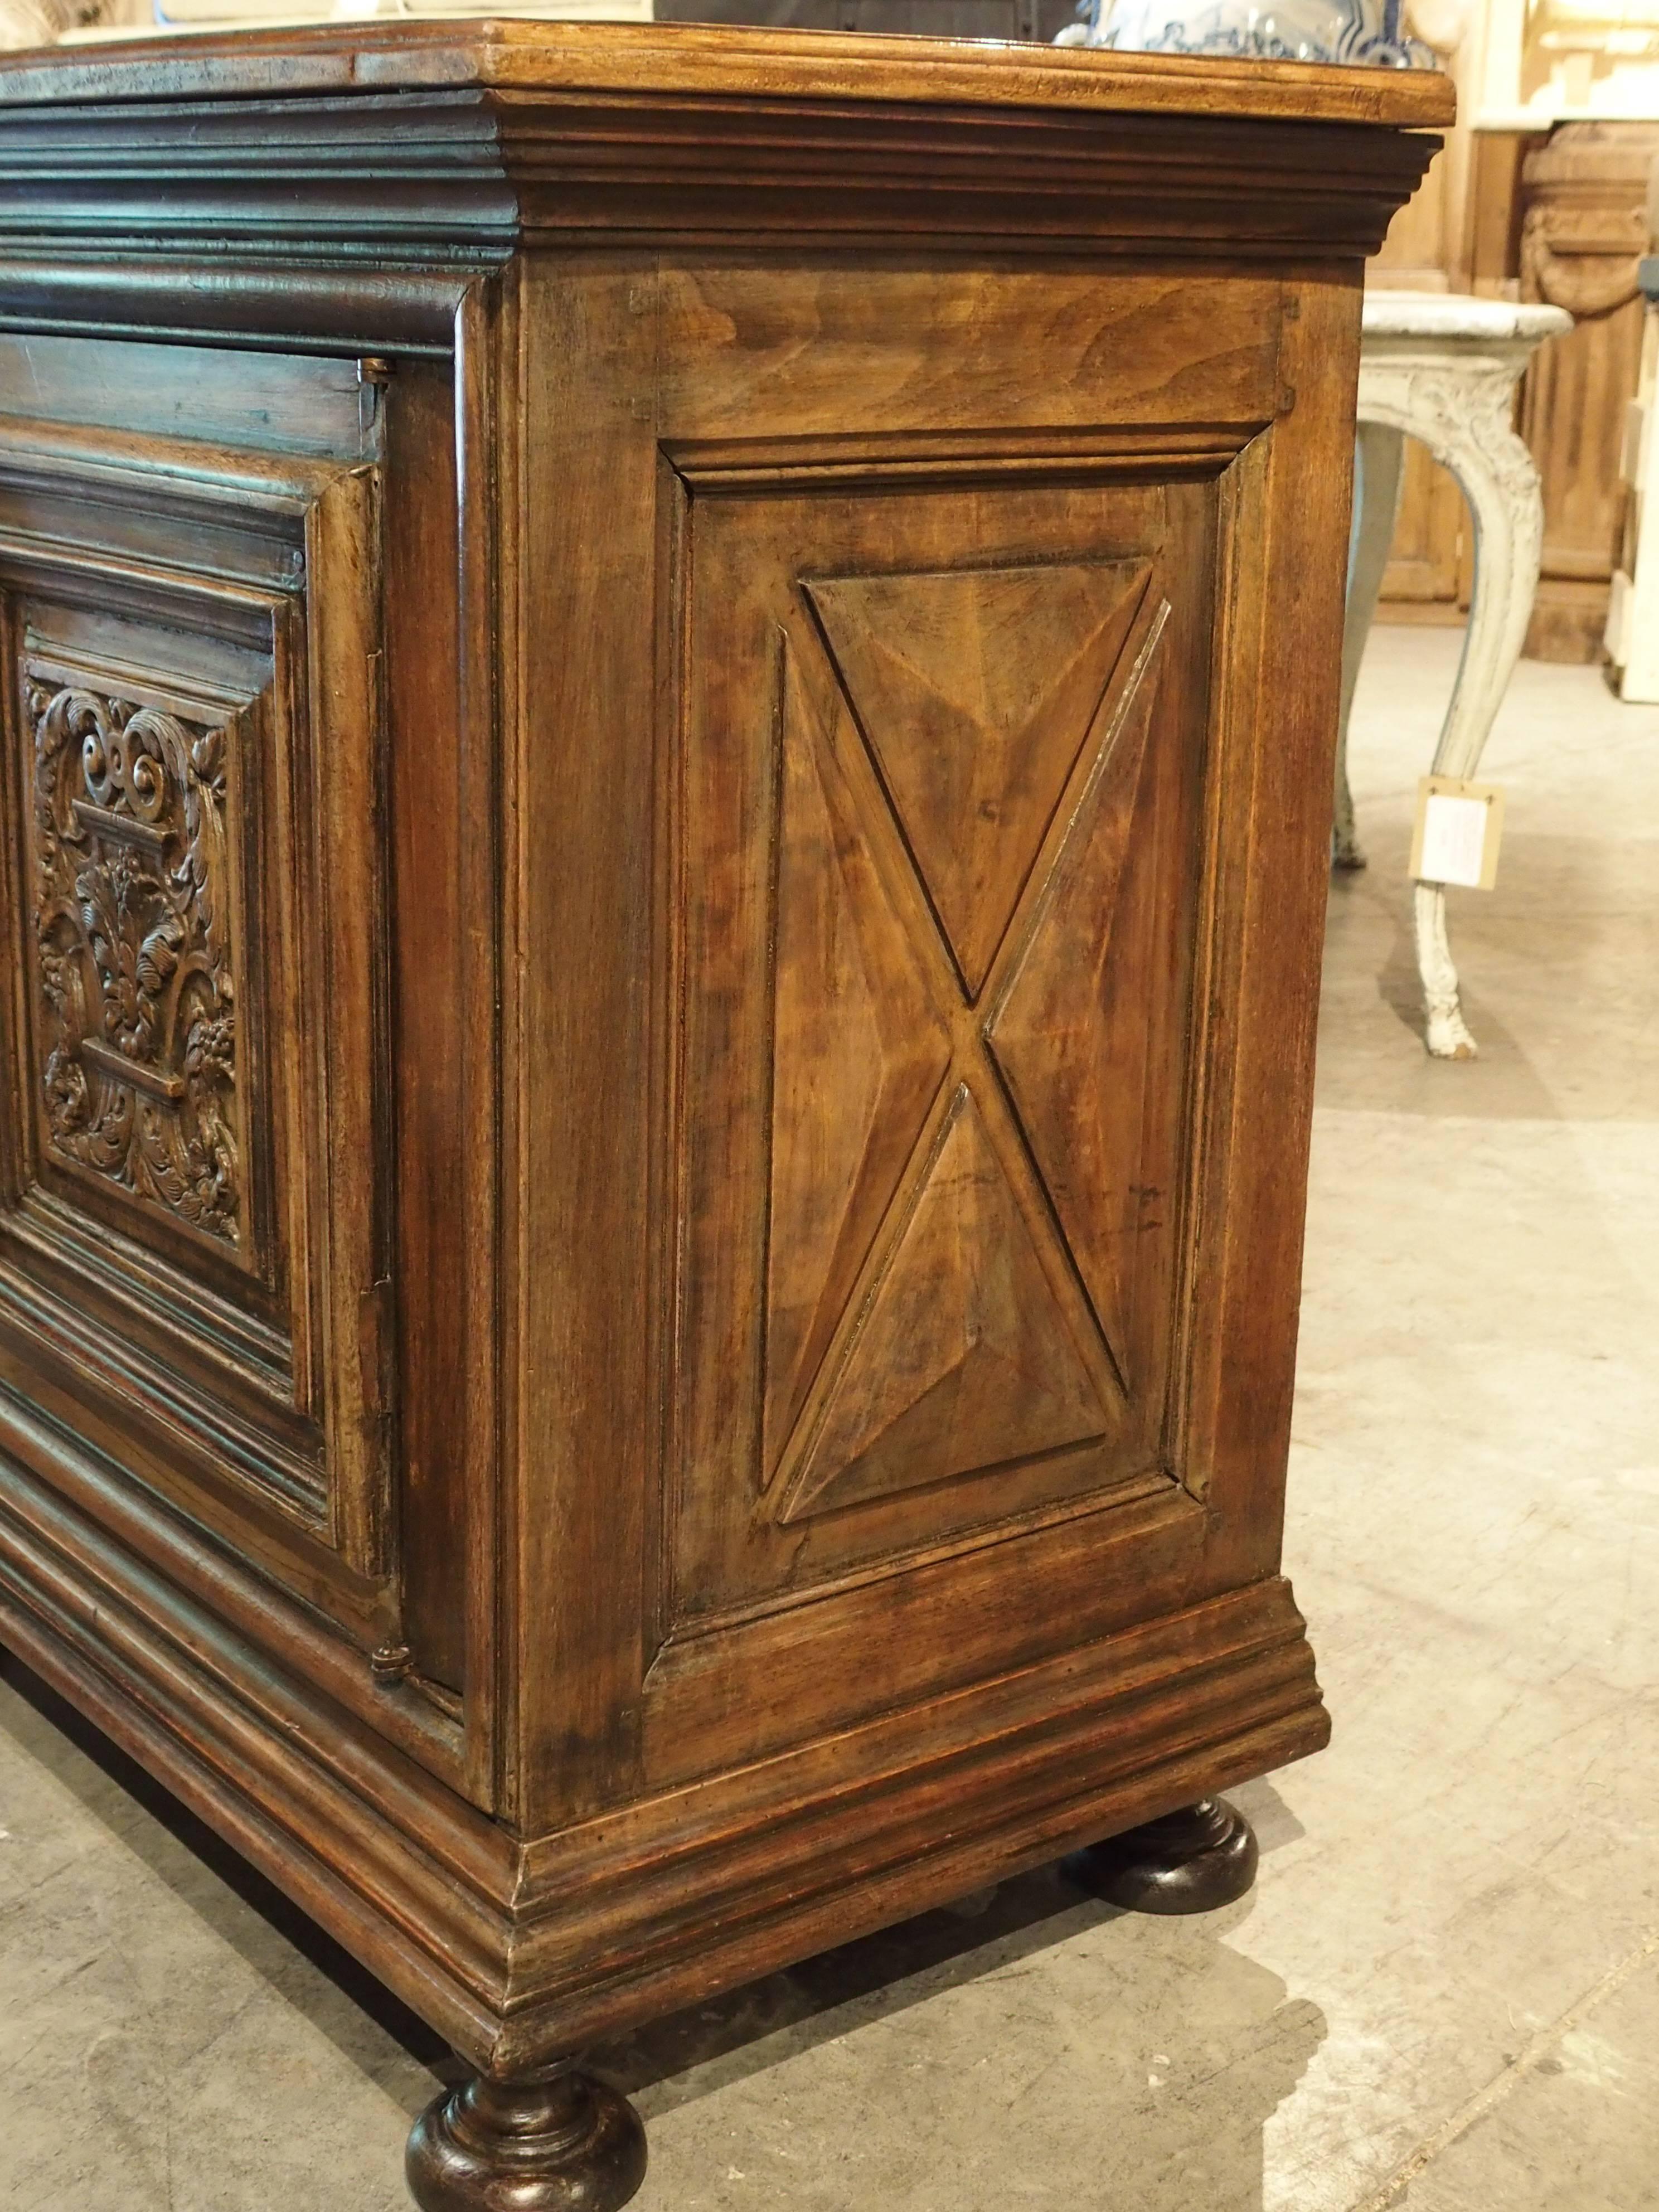 Carved Antique French Confiturier Cabinet